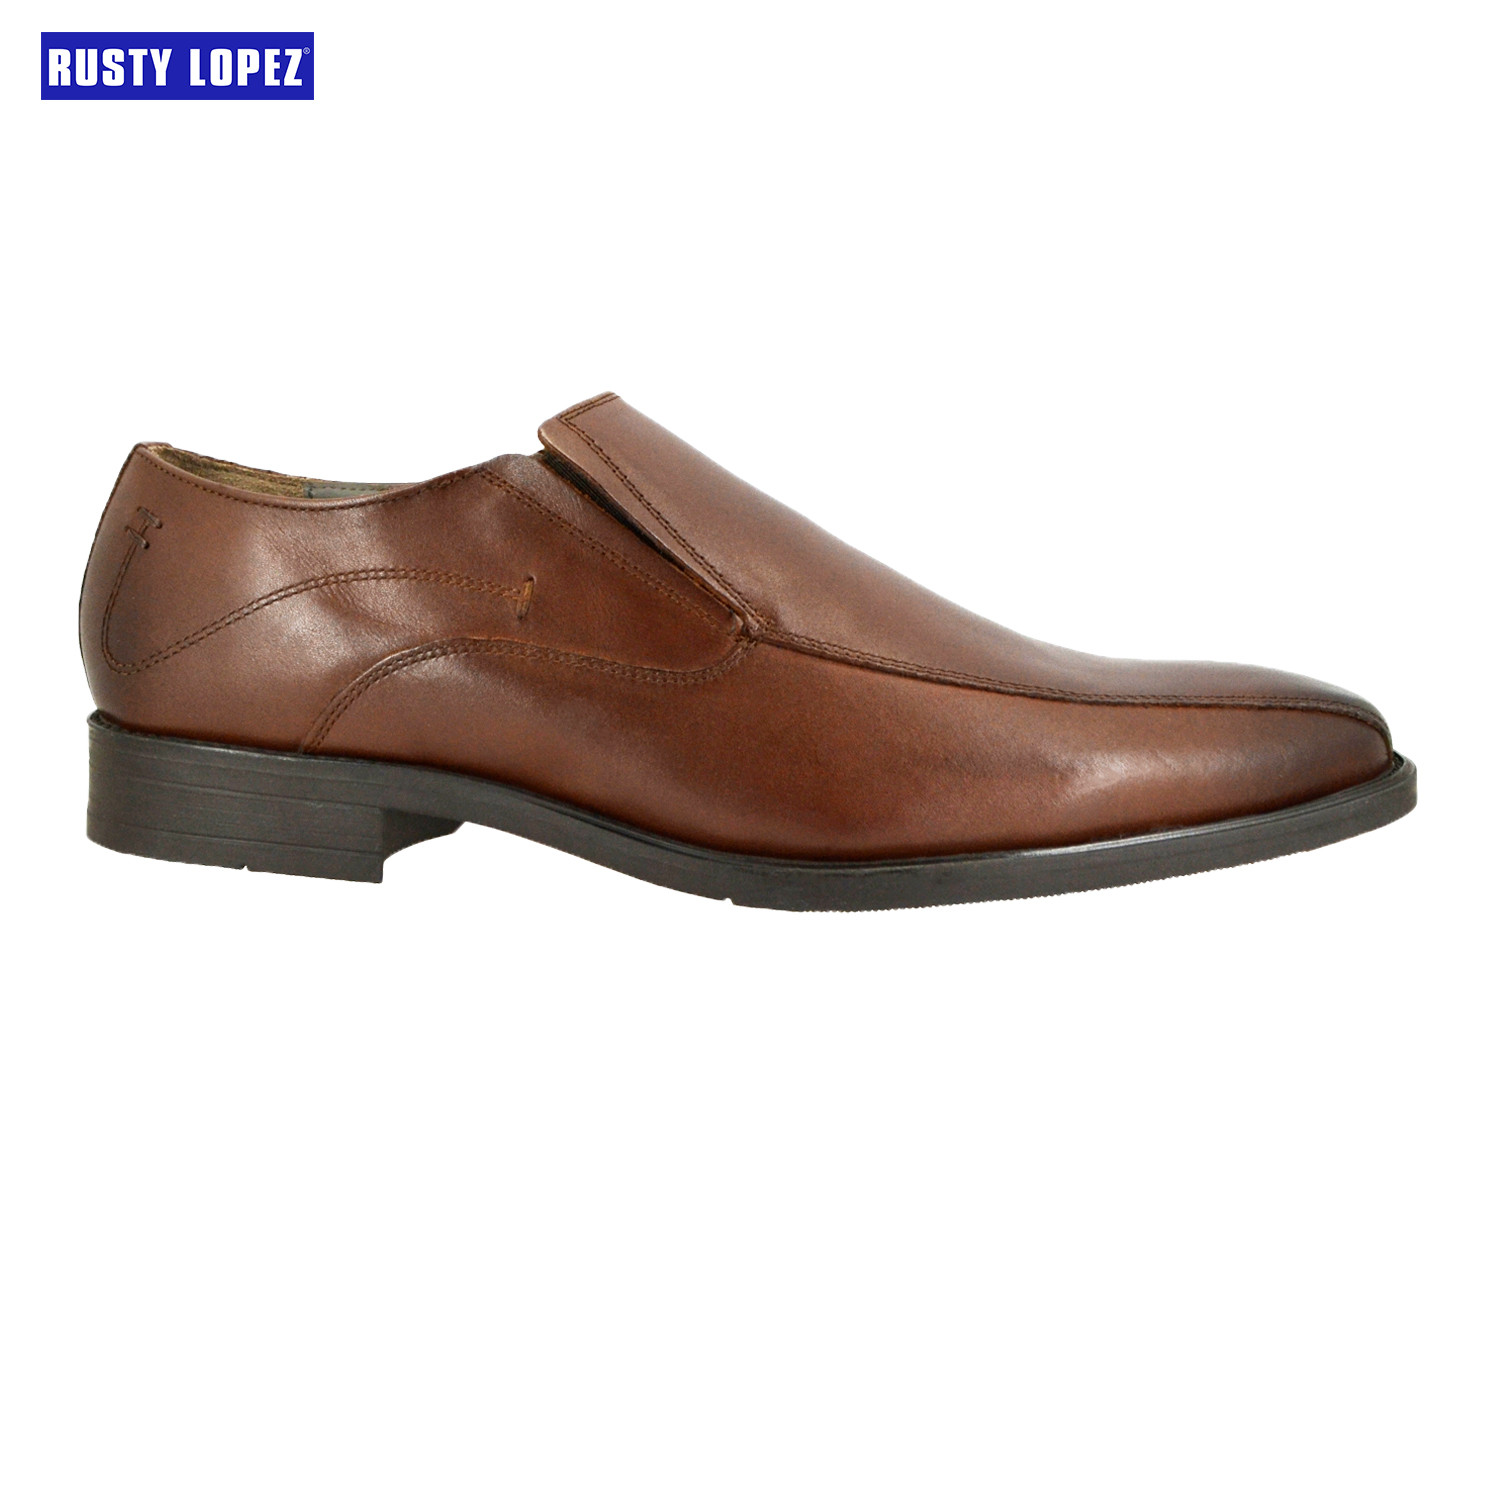 Rusty Lopez Men’s Formal Shoes – KARTER